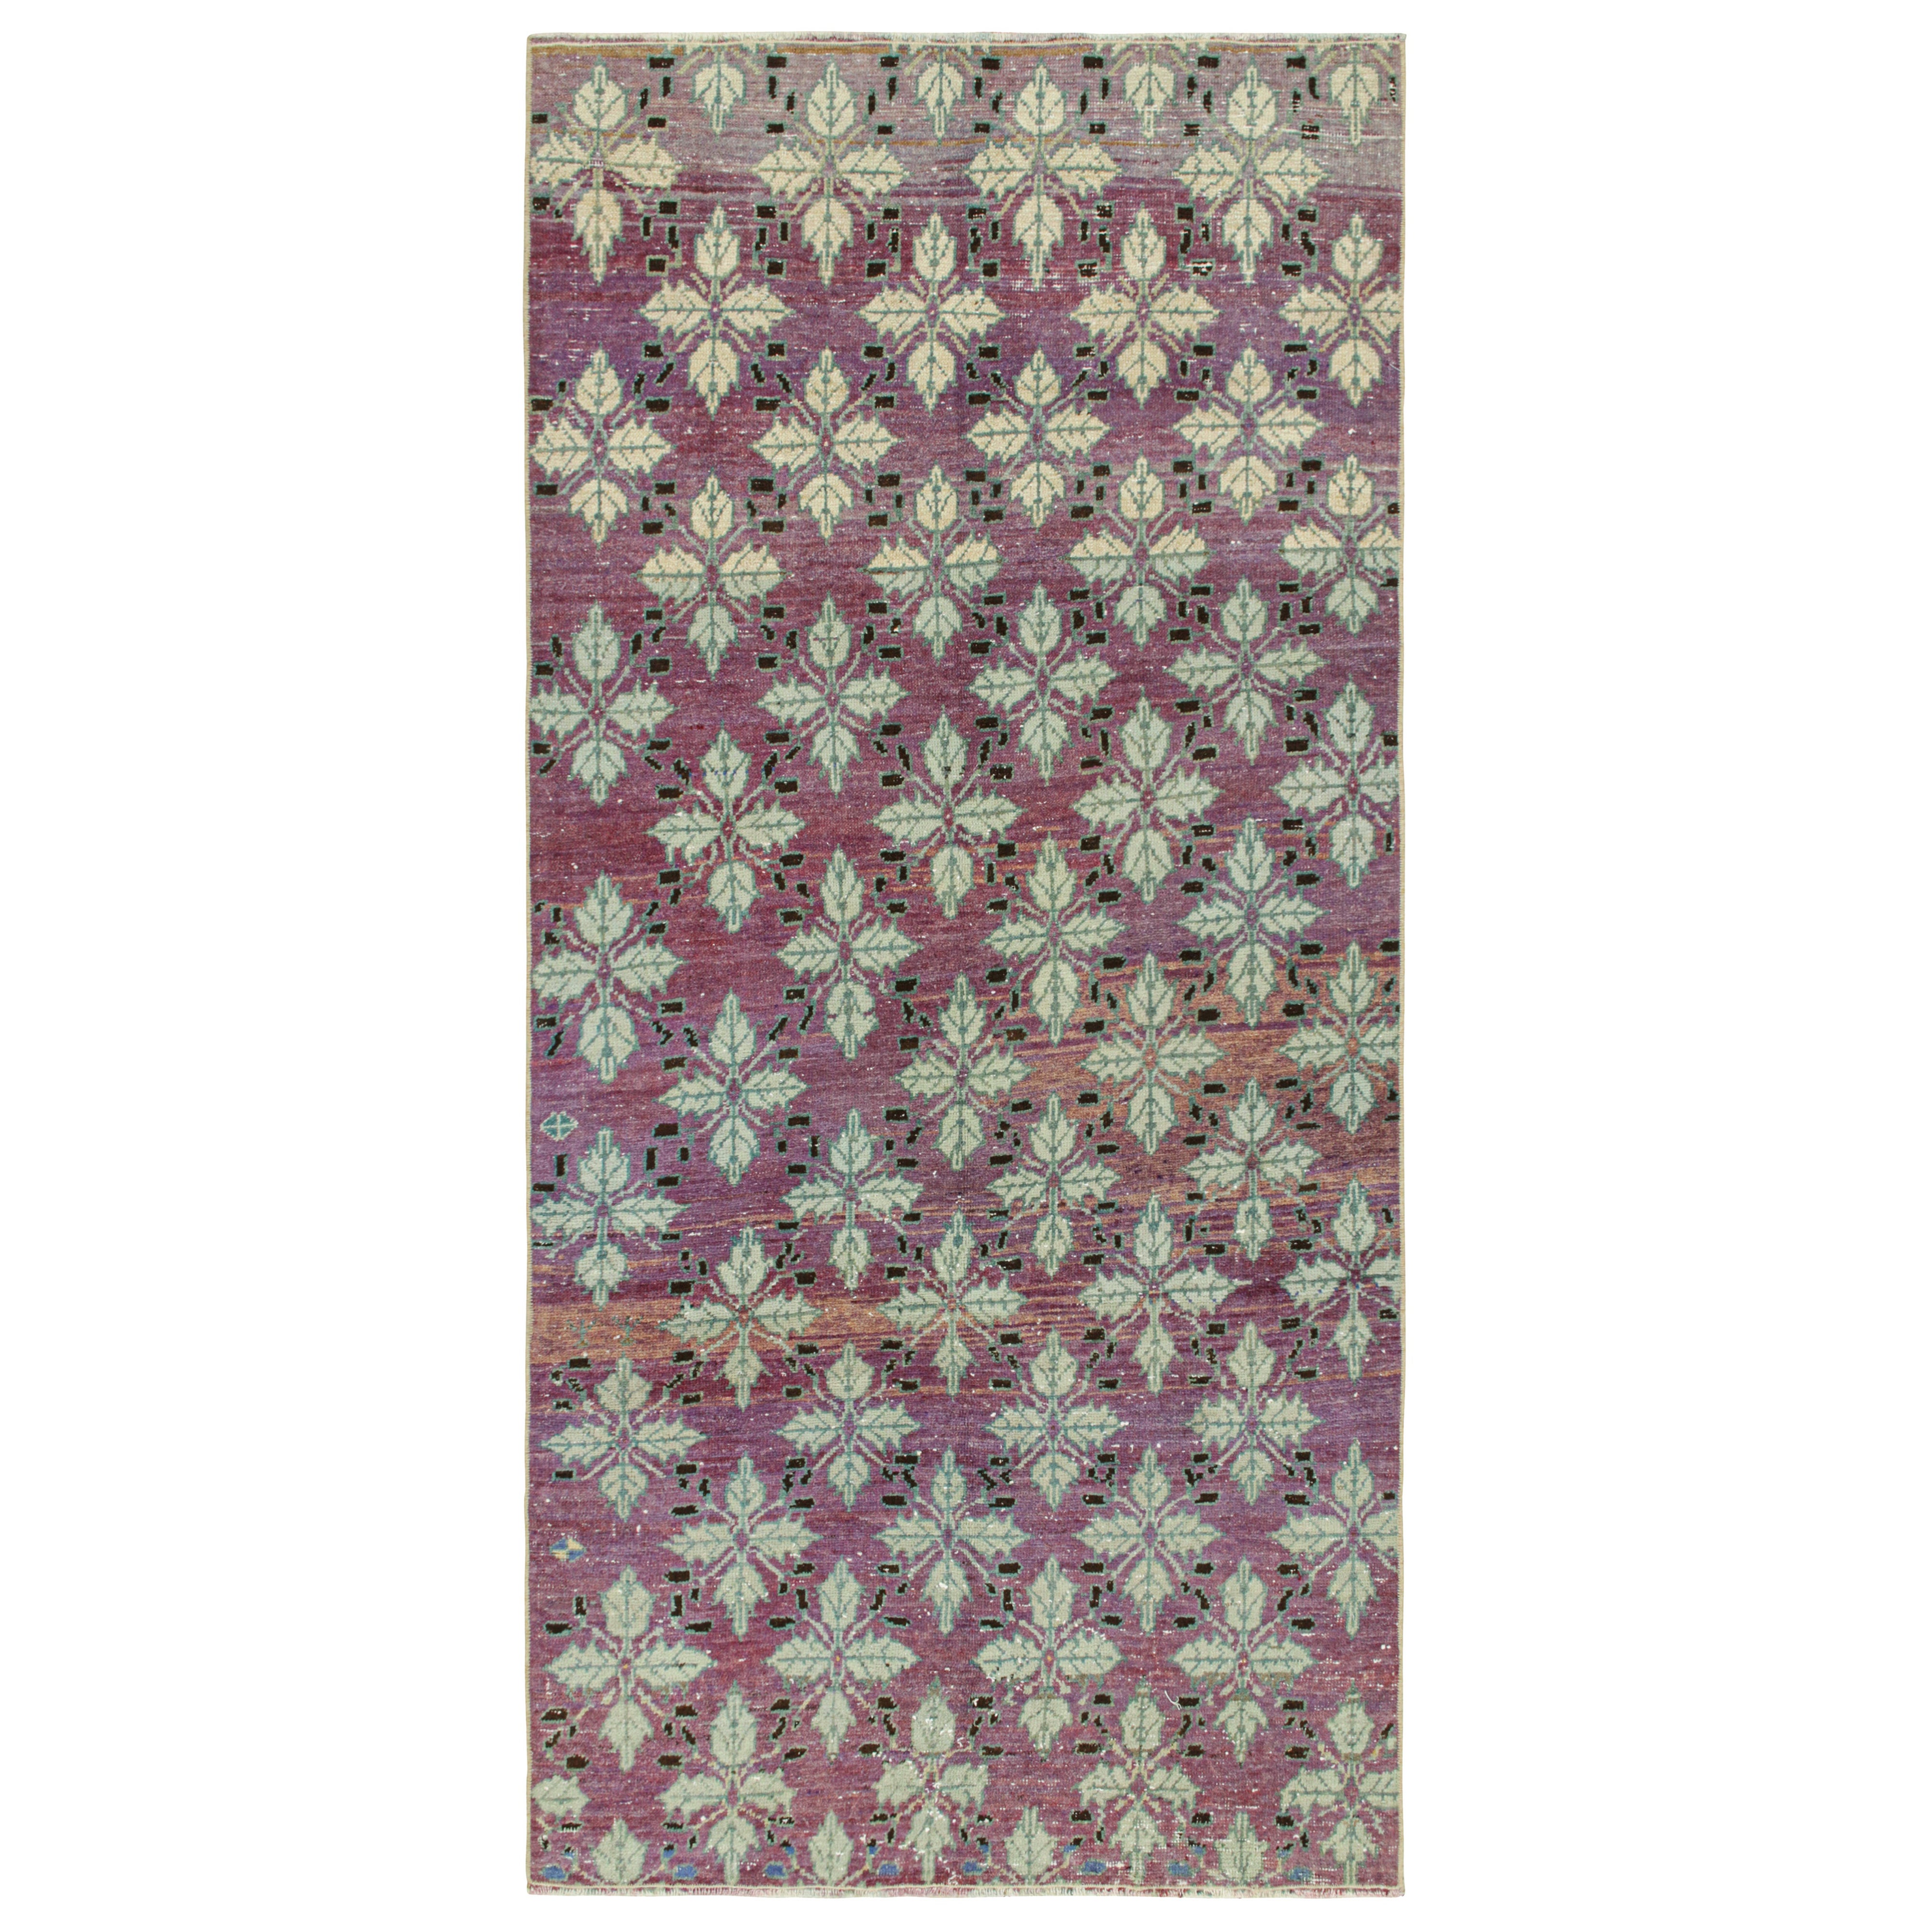 Vintage Zeki Müren Rug in Purple with Floral Patterns, by Rug & Kilim